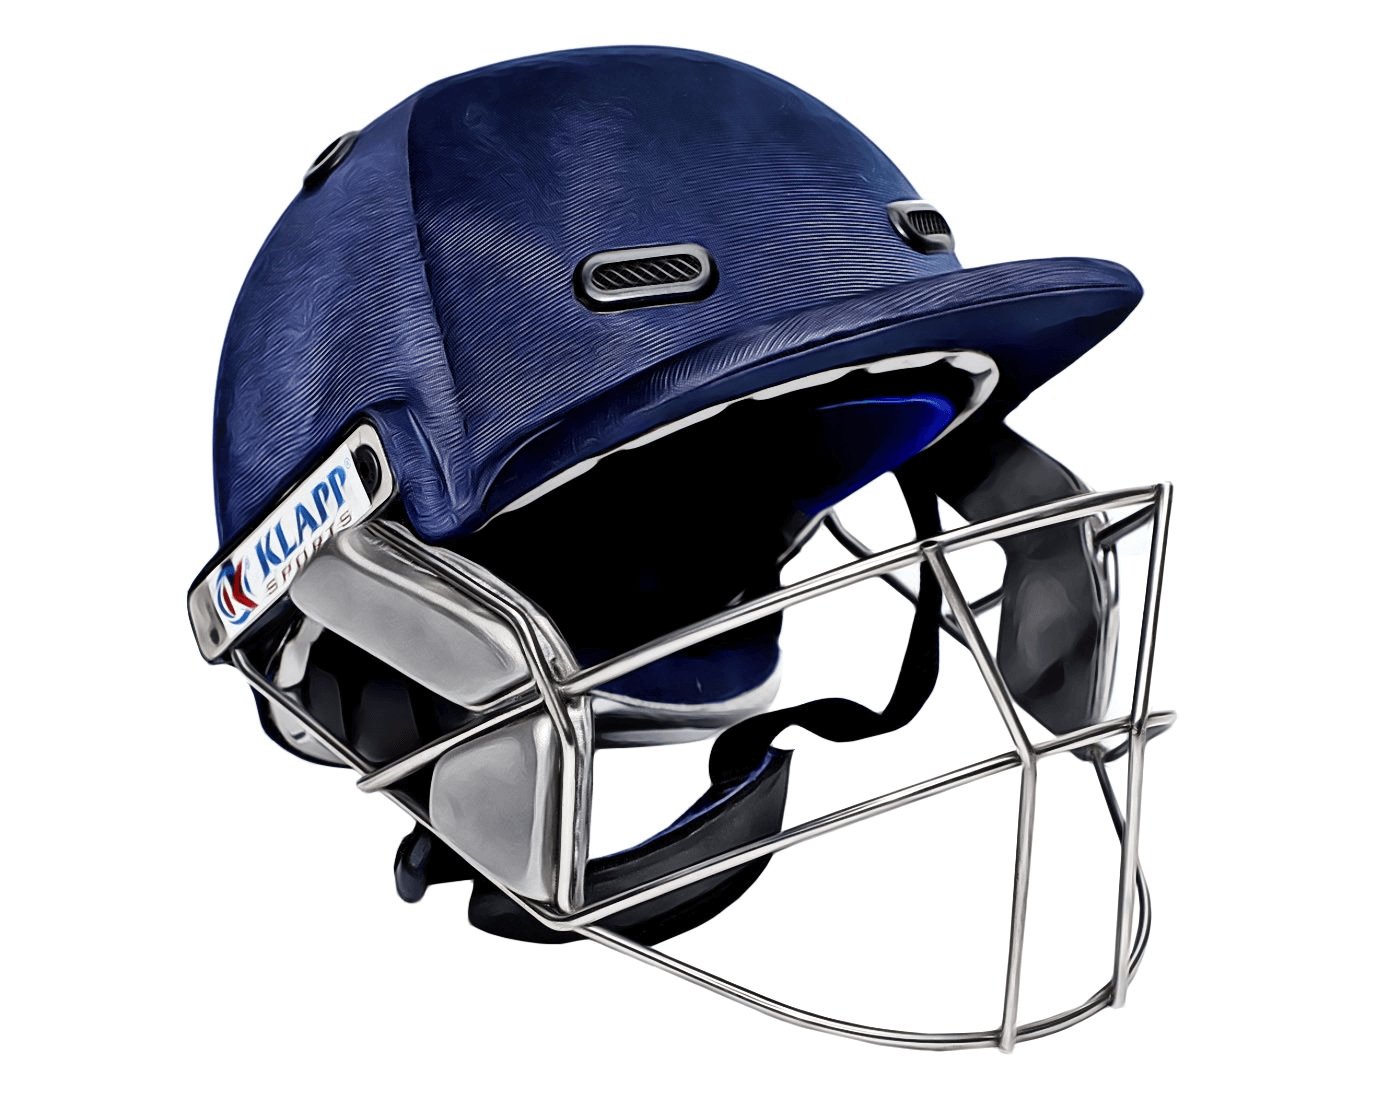 Klapp Professional Stainless Steel Grille Cricket Helmet